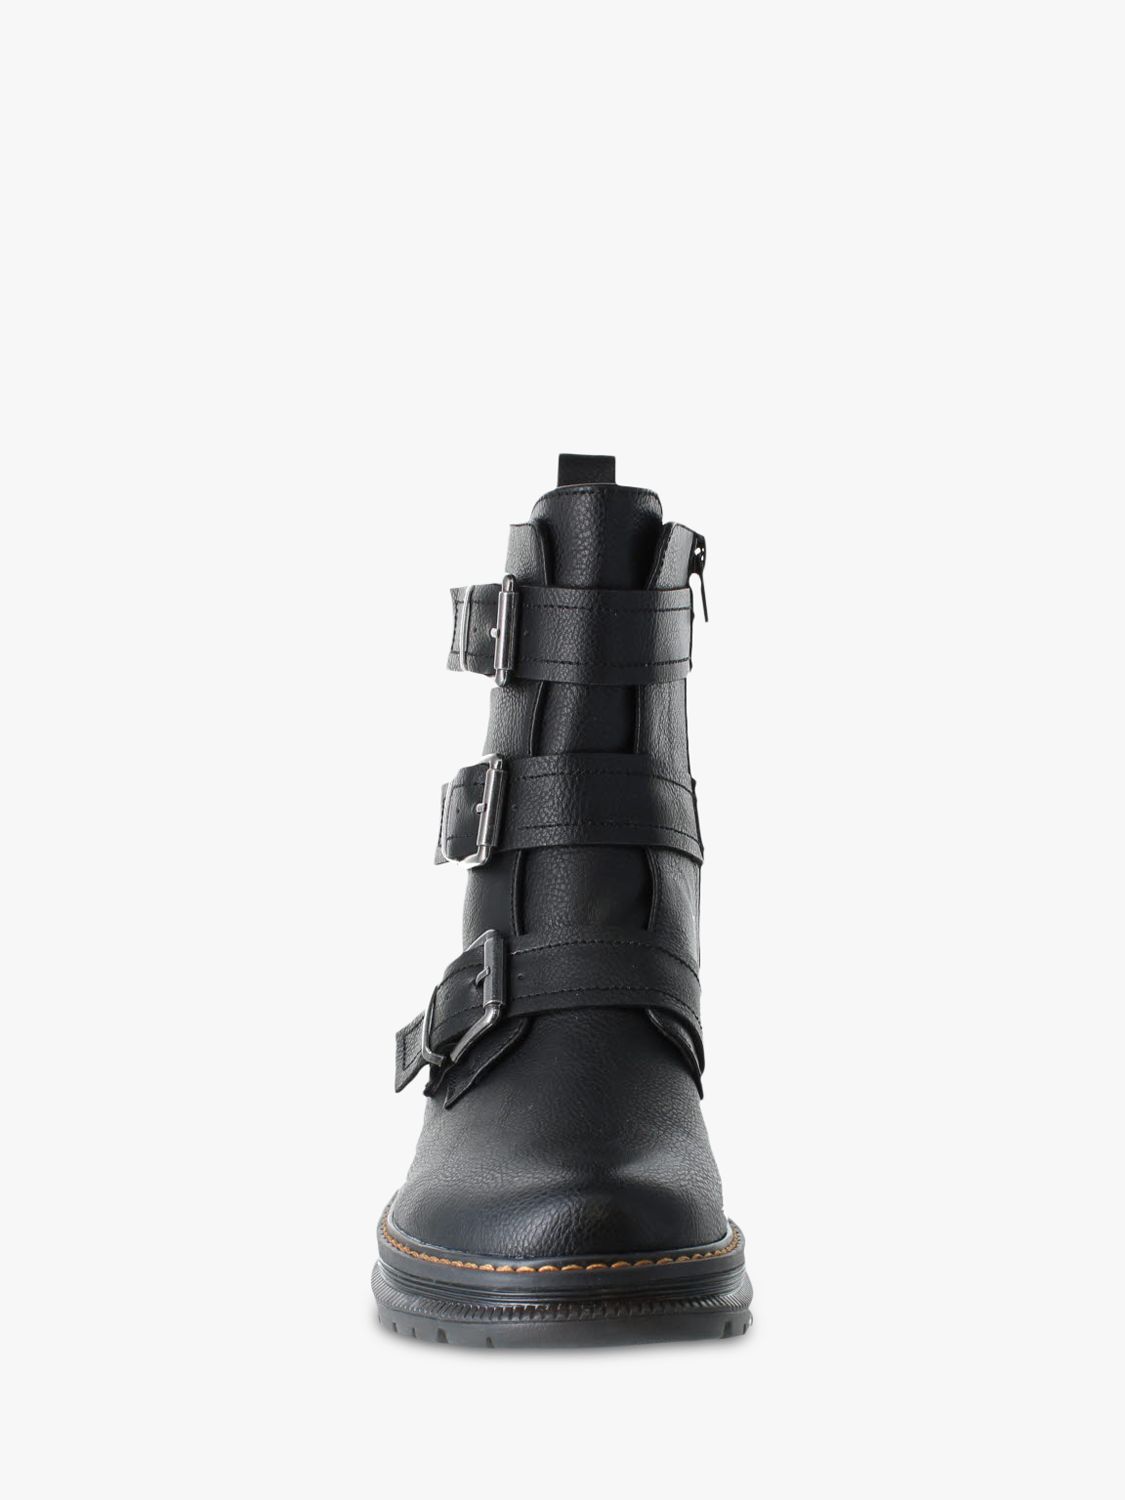 Westland by Josef Seibel Peyton Biker Boots With Buckle Detail, Black, 4